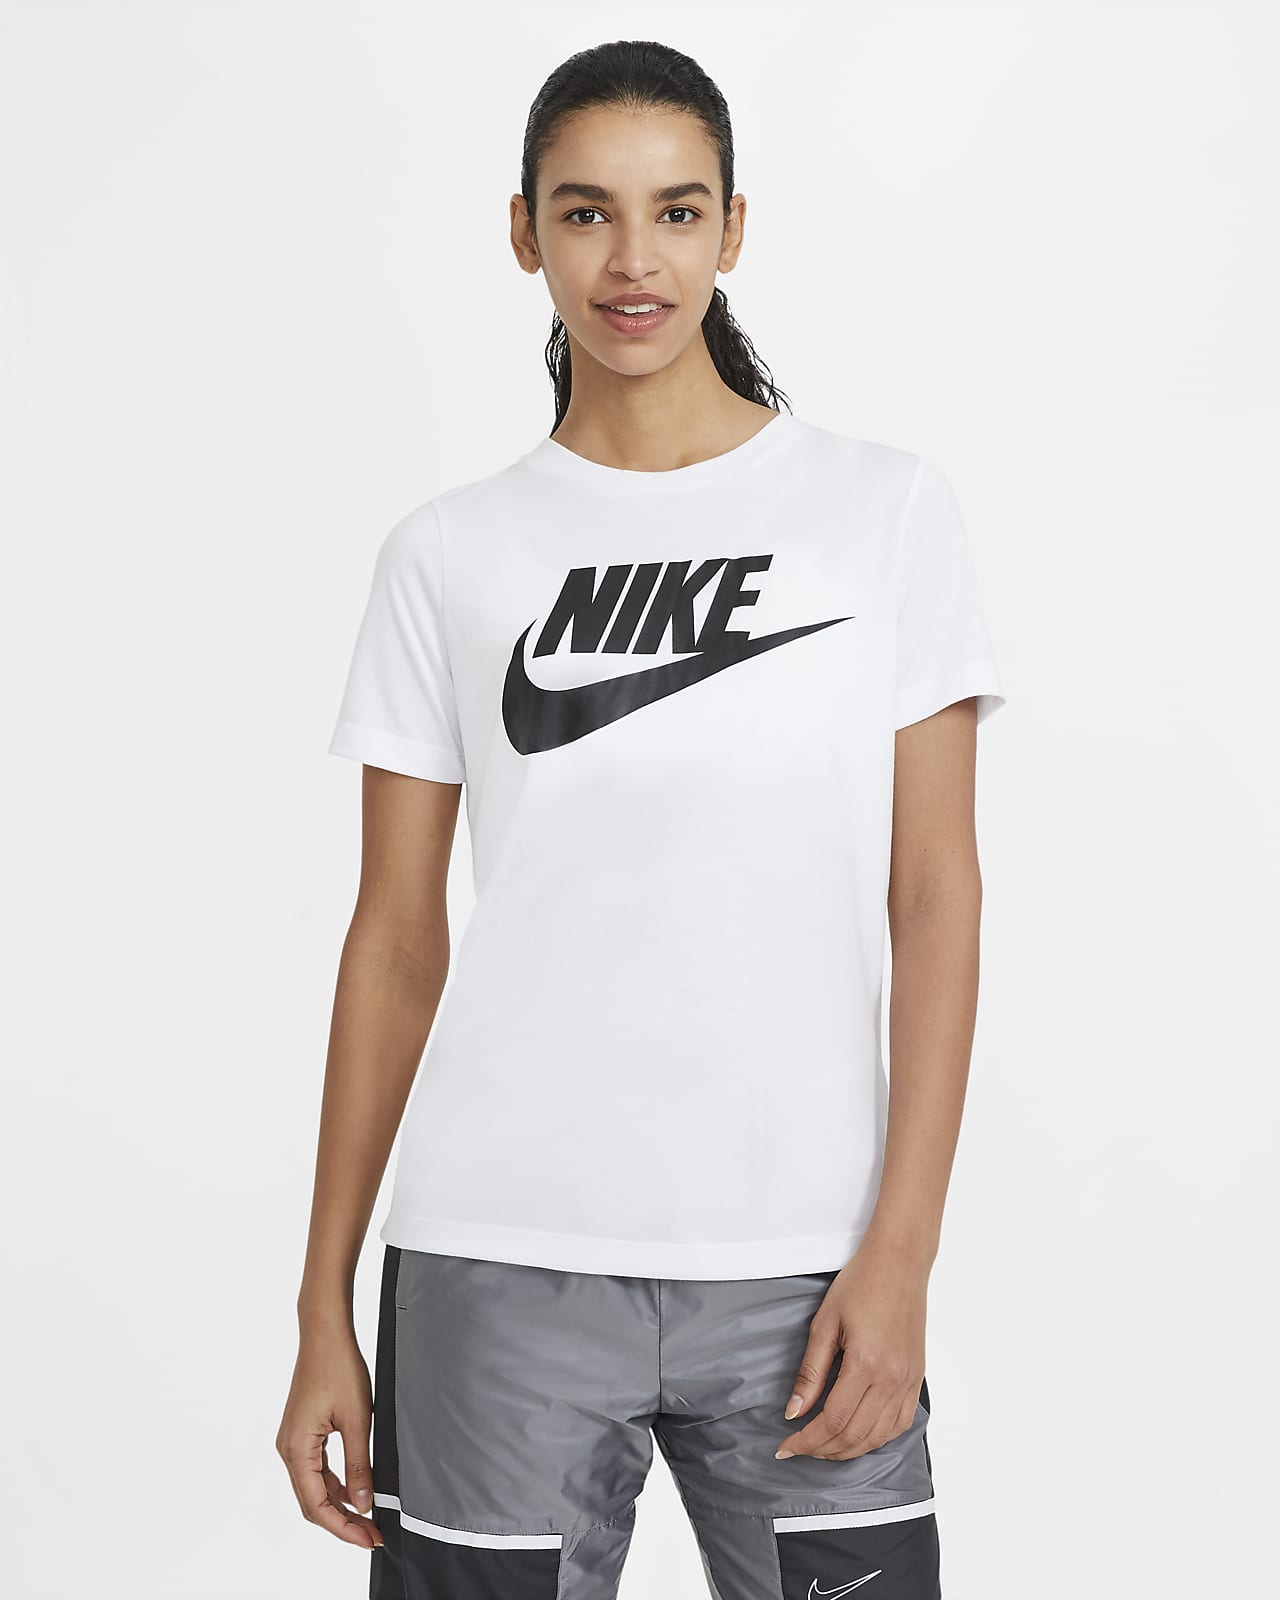 Femmes Lifestyle Hauts et tee-shirts. Nike FR